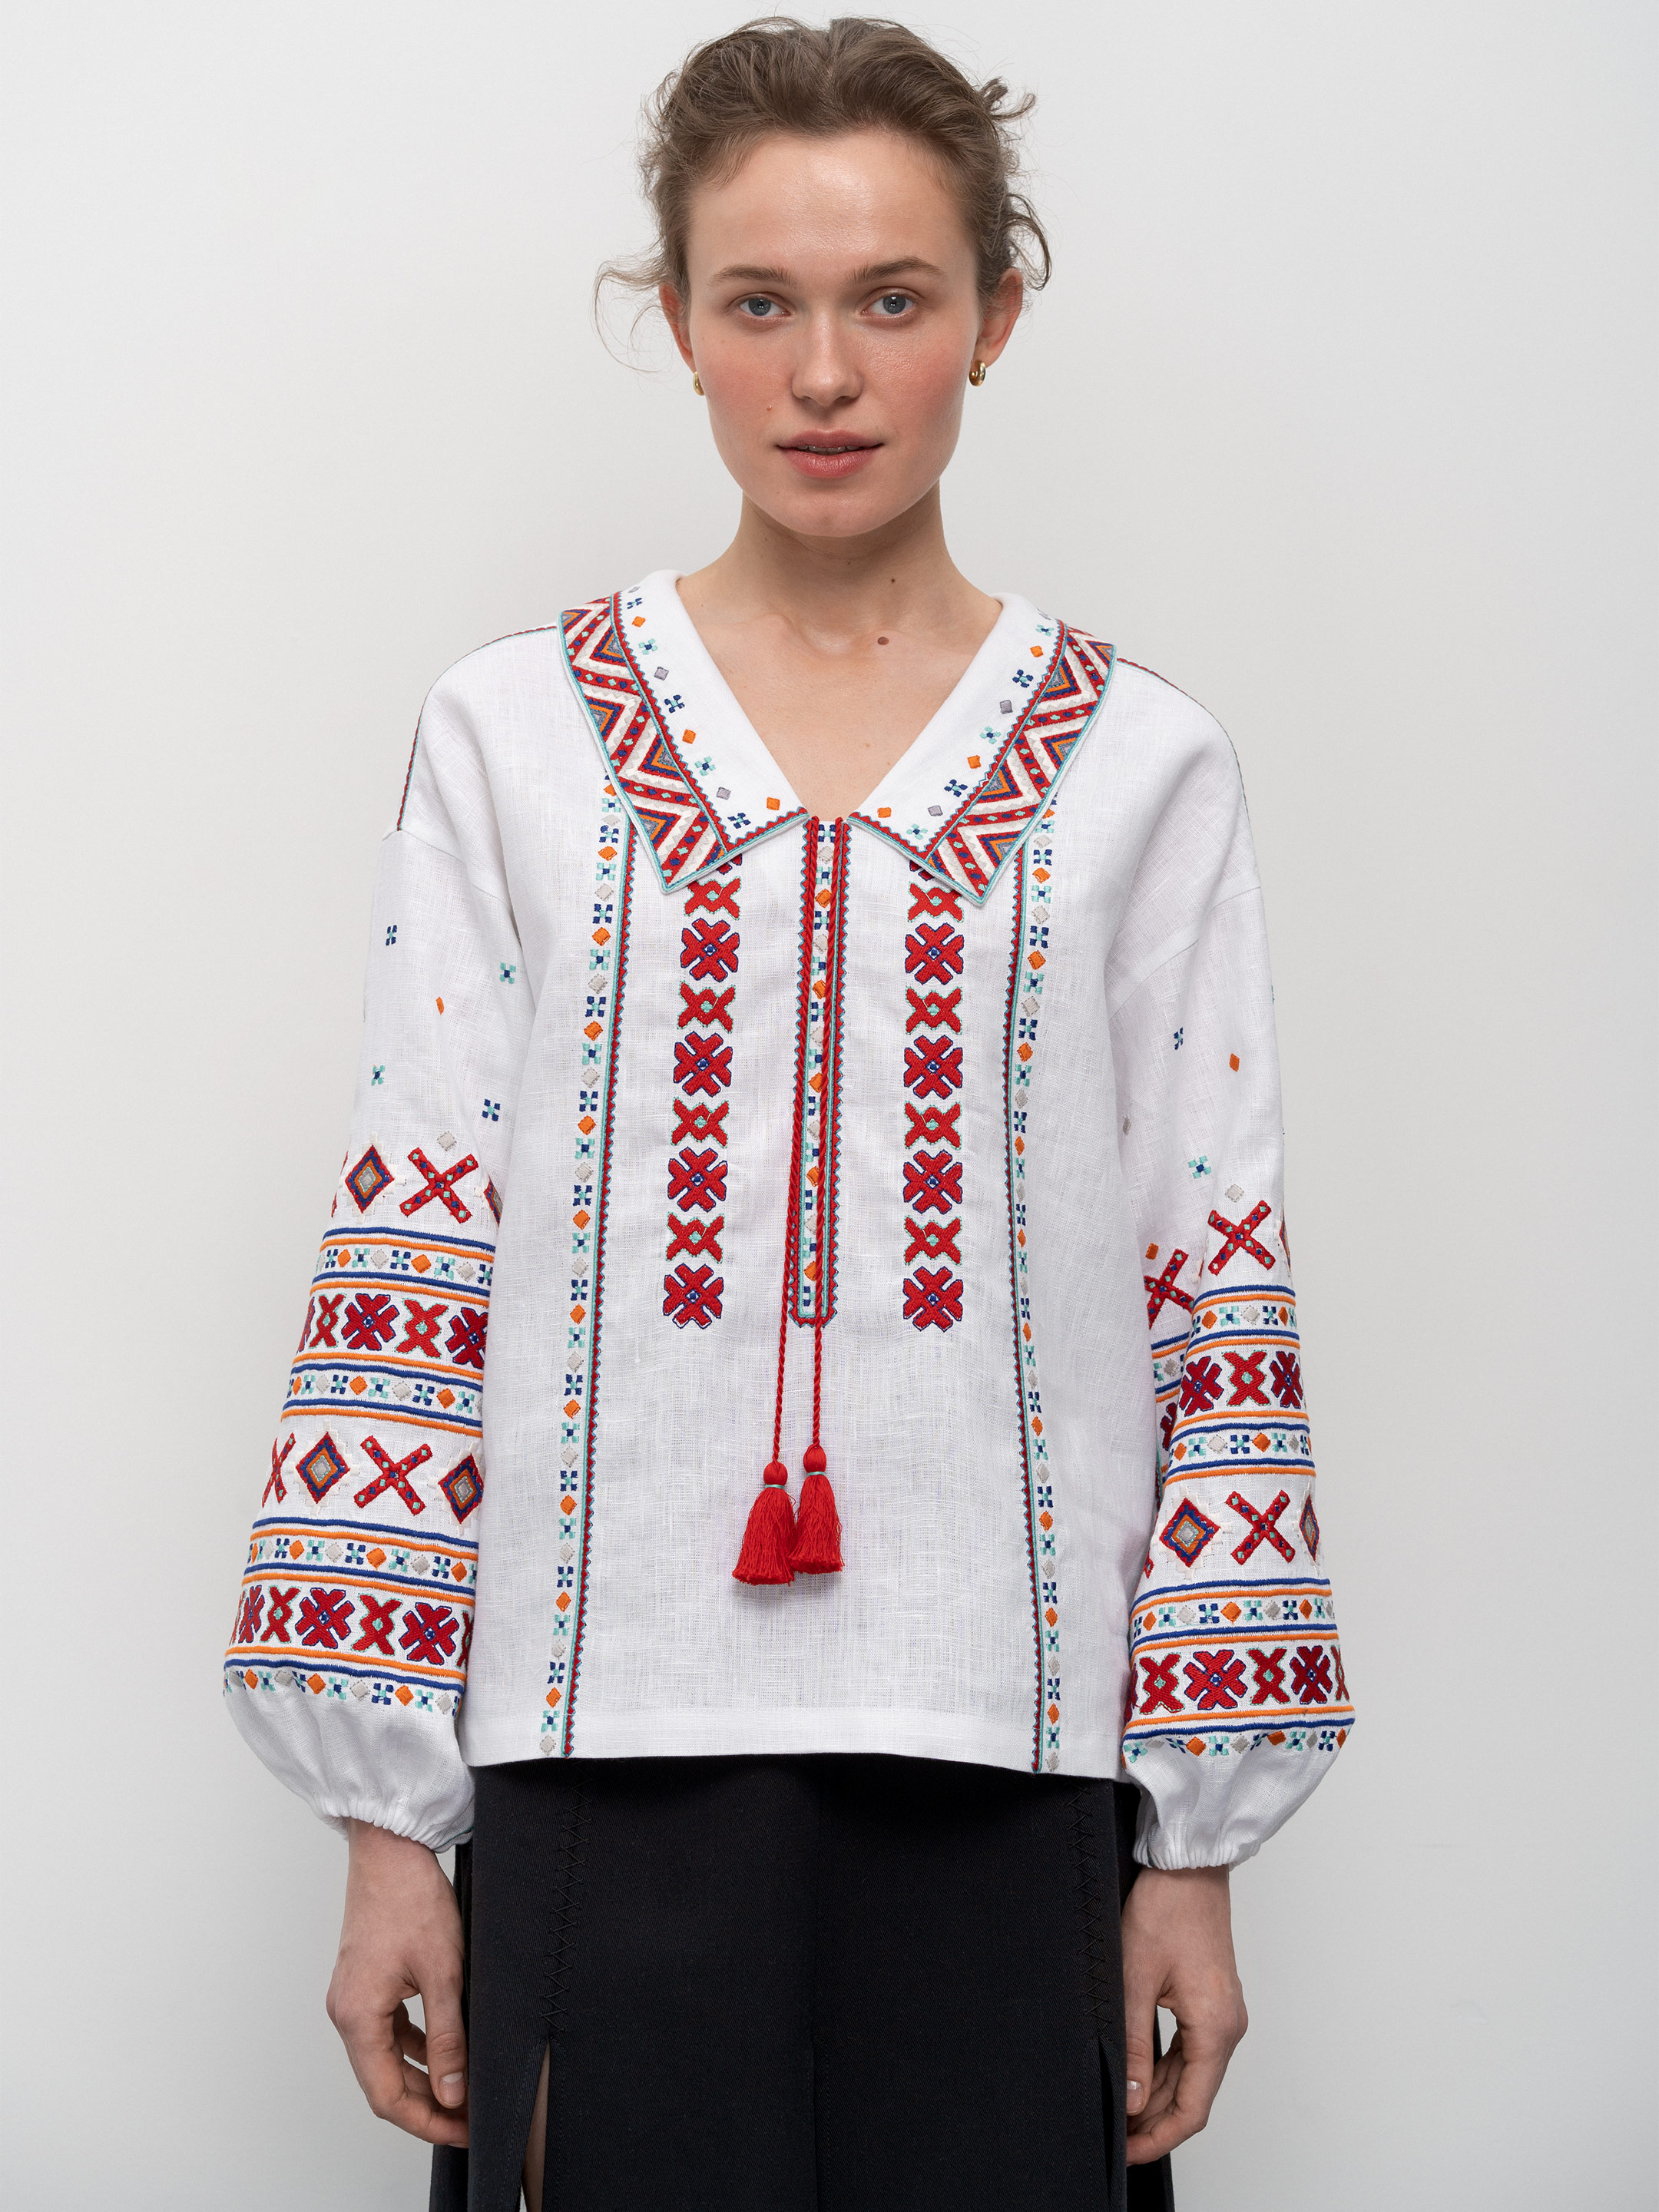 Women's shirt of the Polissya Rivne - photo 1